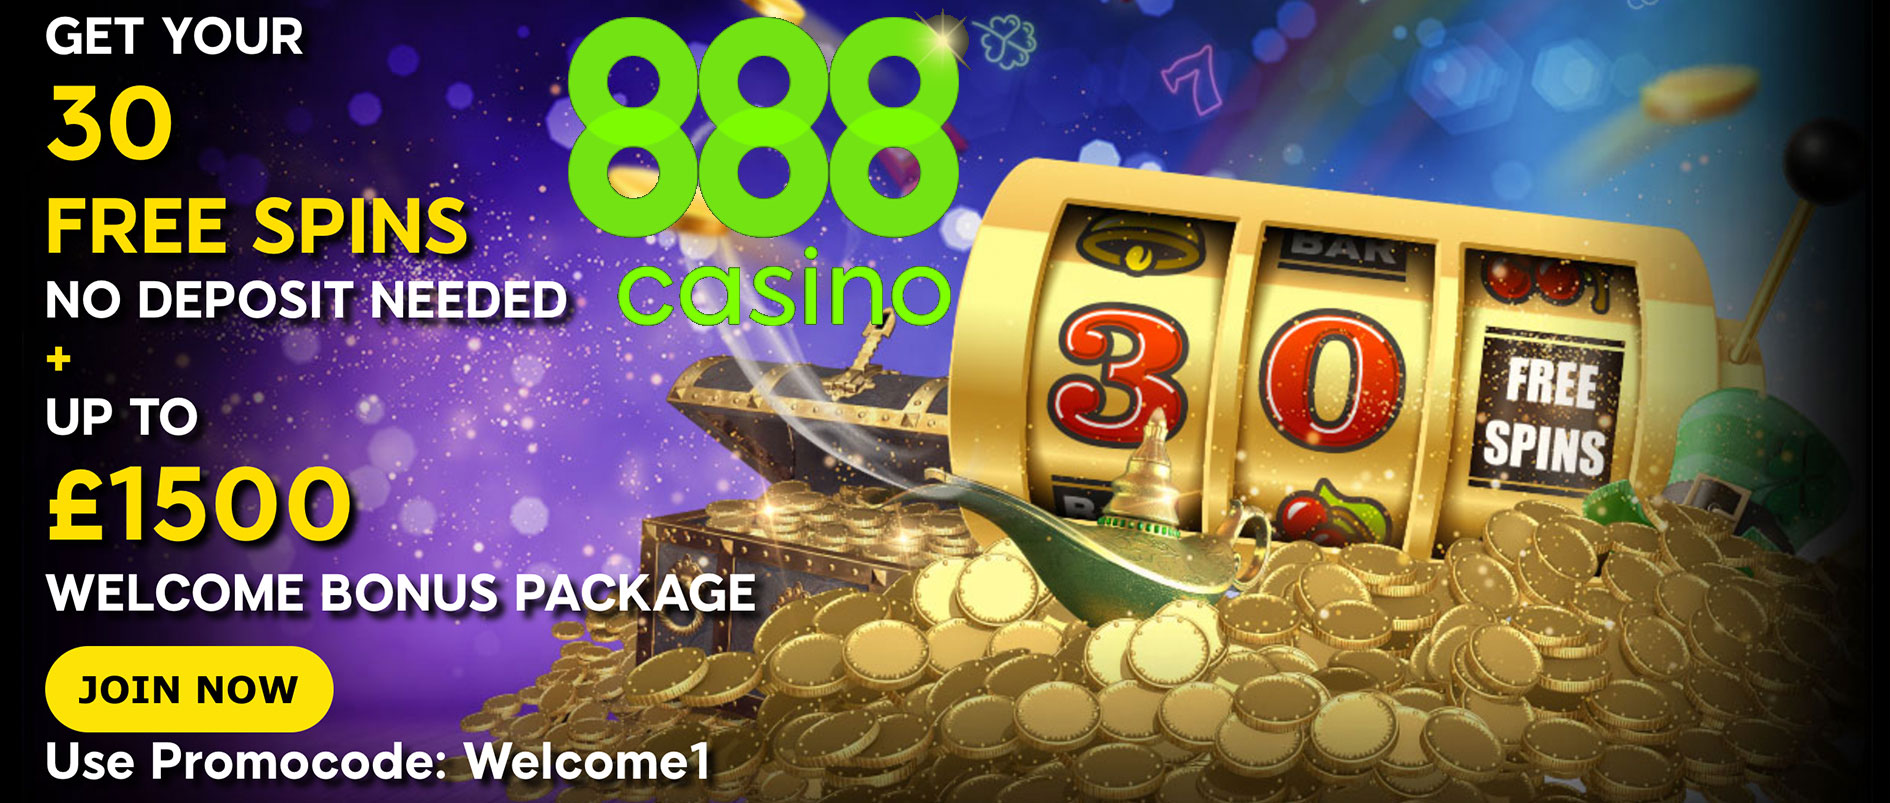 888 casino offer